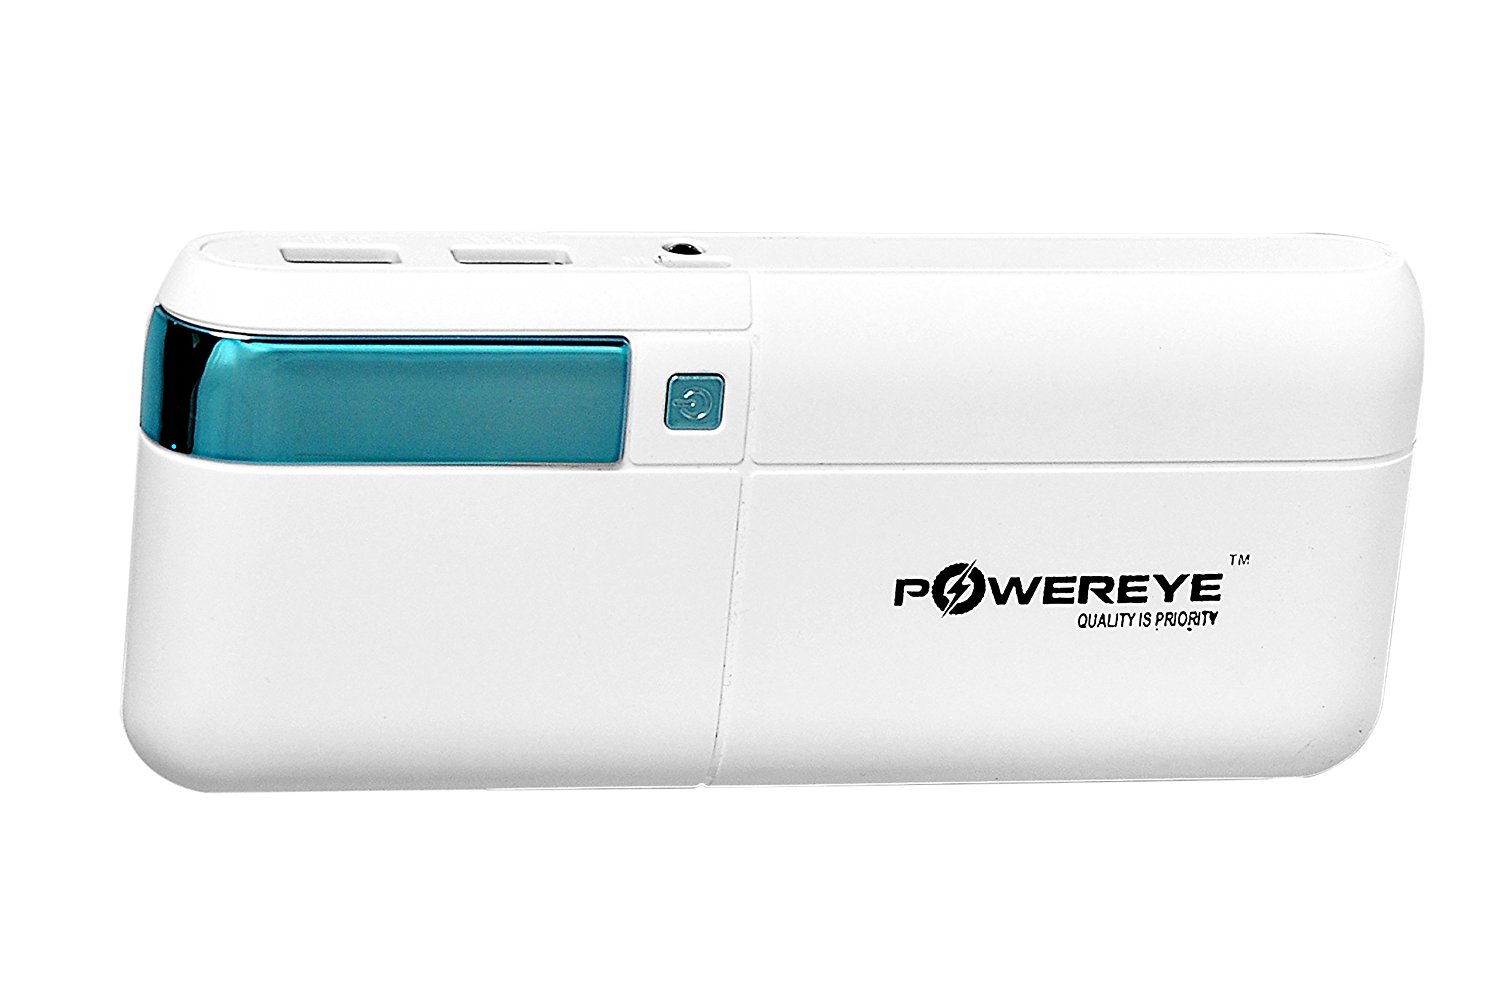 Amazon: Buy Powereye 13000mAh Power Bank at Rs 599 only